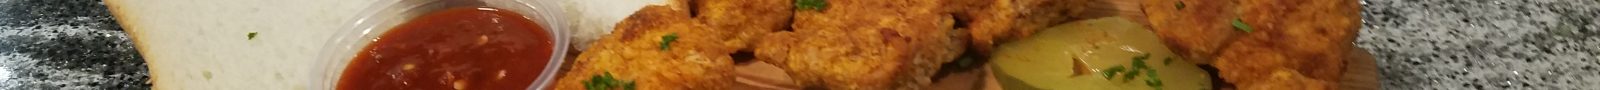 Karaage Chicken +Hyper-spice with Lemon Aioli